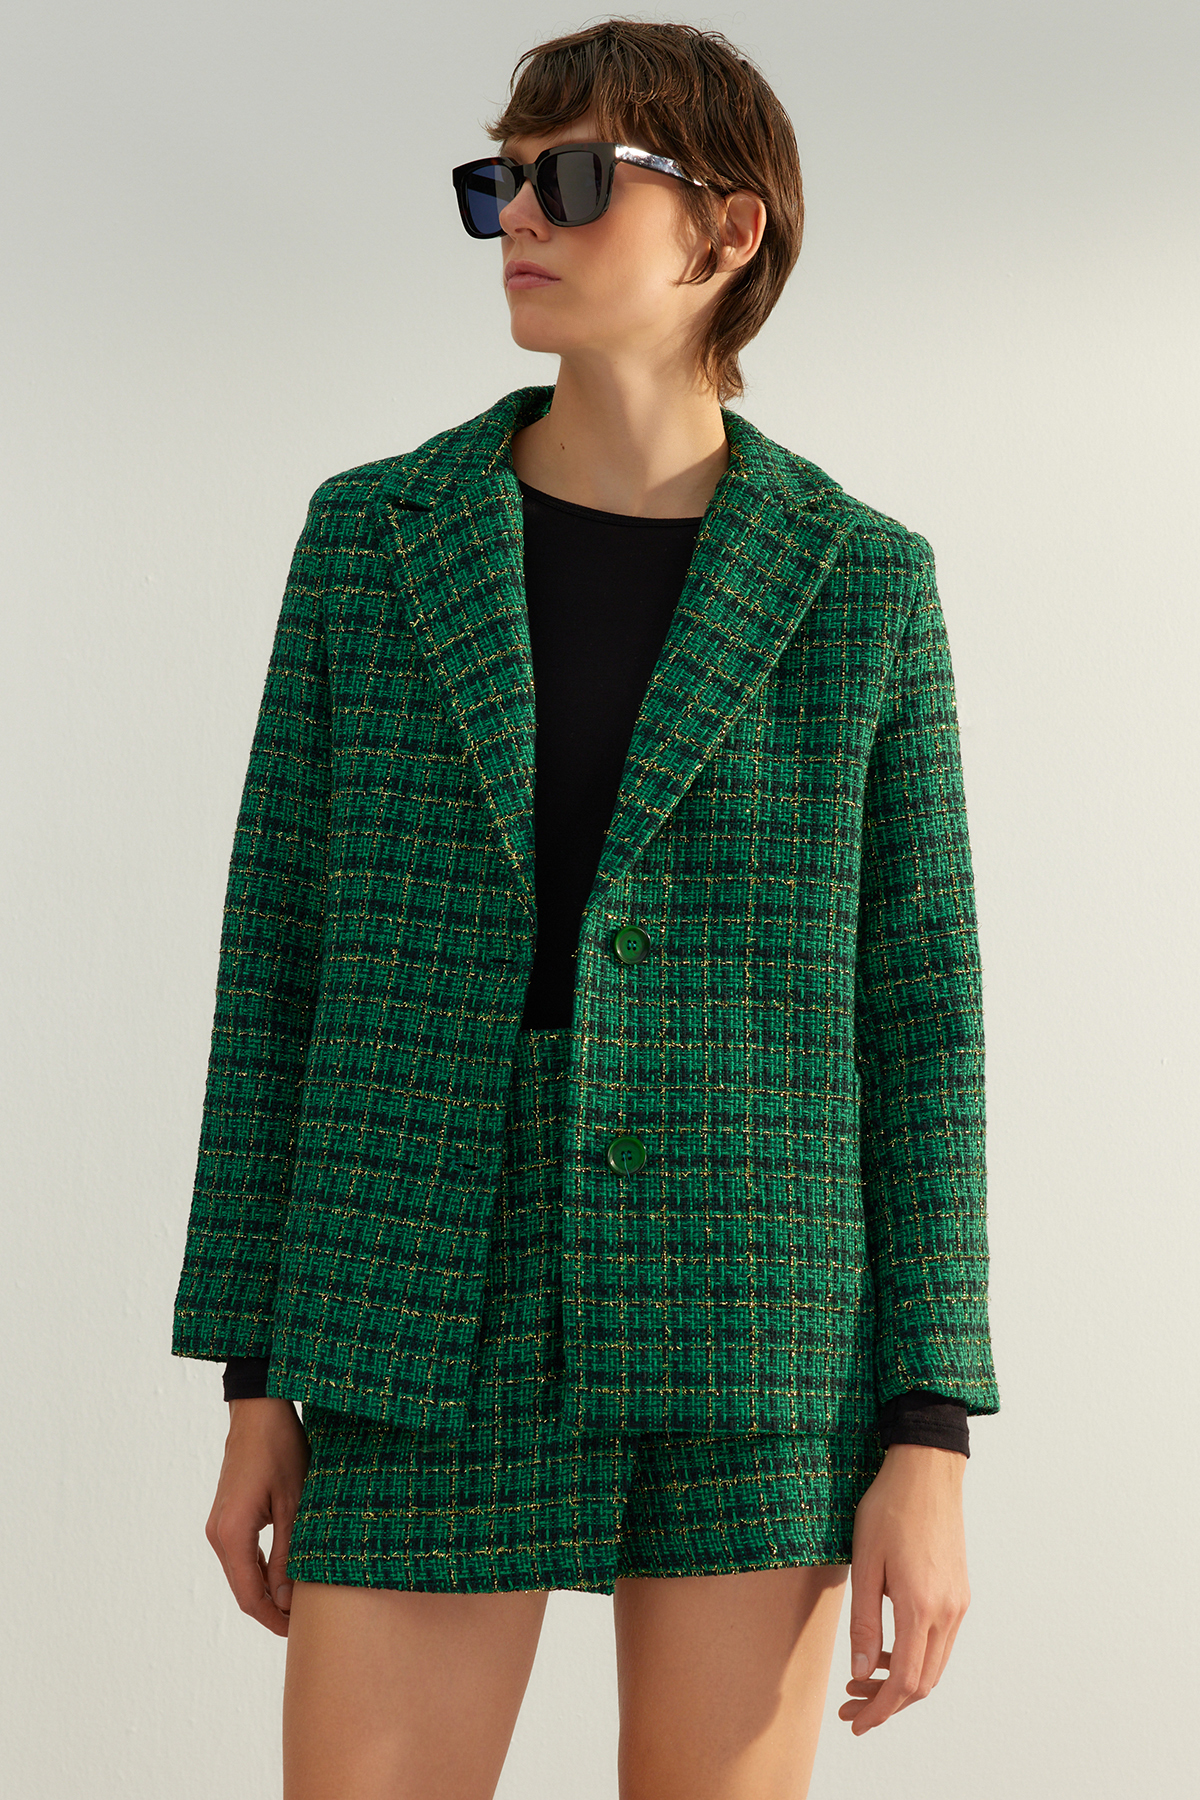 Trendyol Green Premium Regular Lined Woven Plaid Blazer Jacket